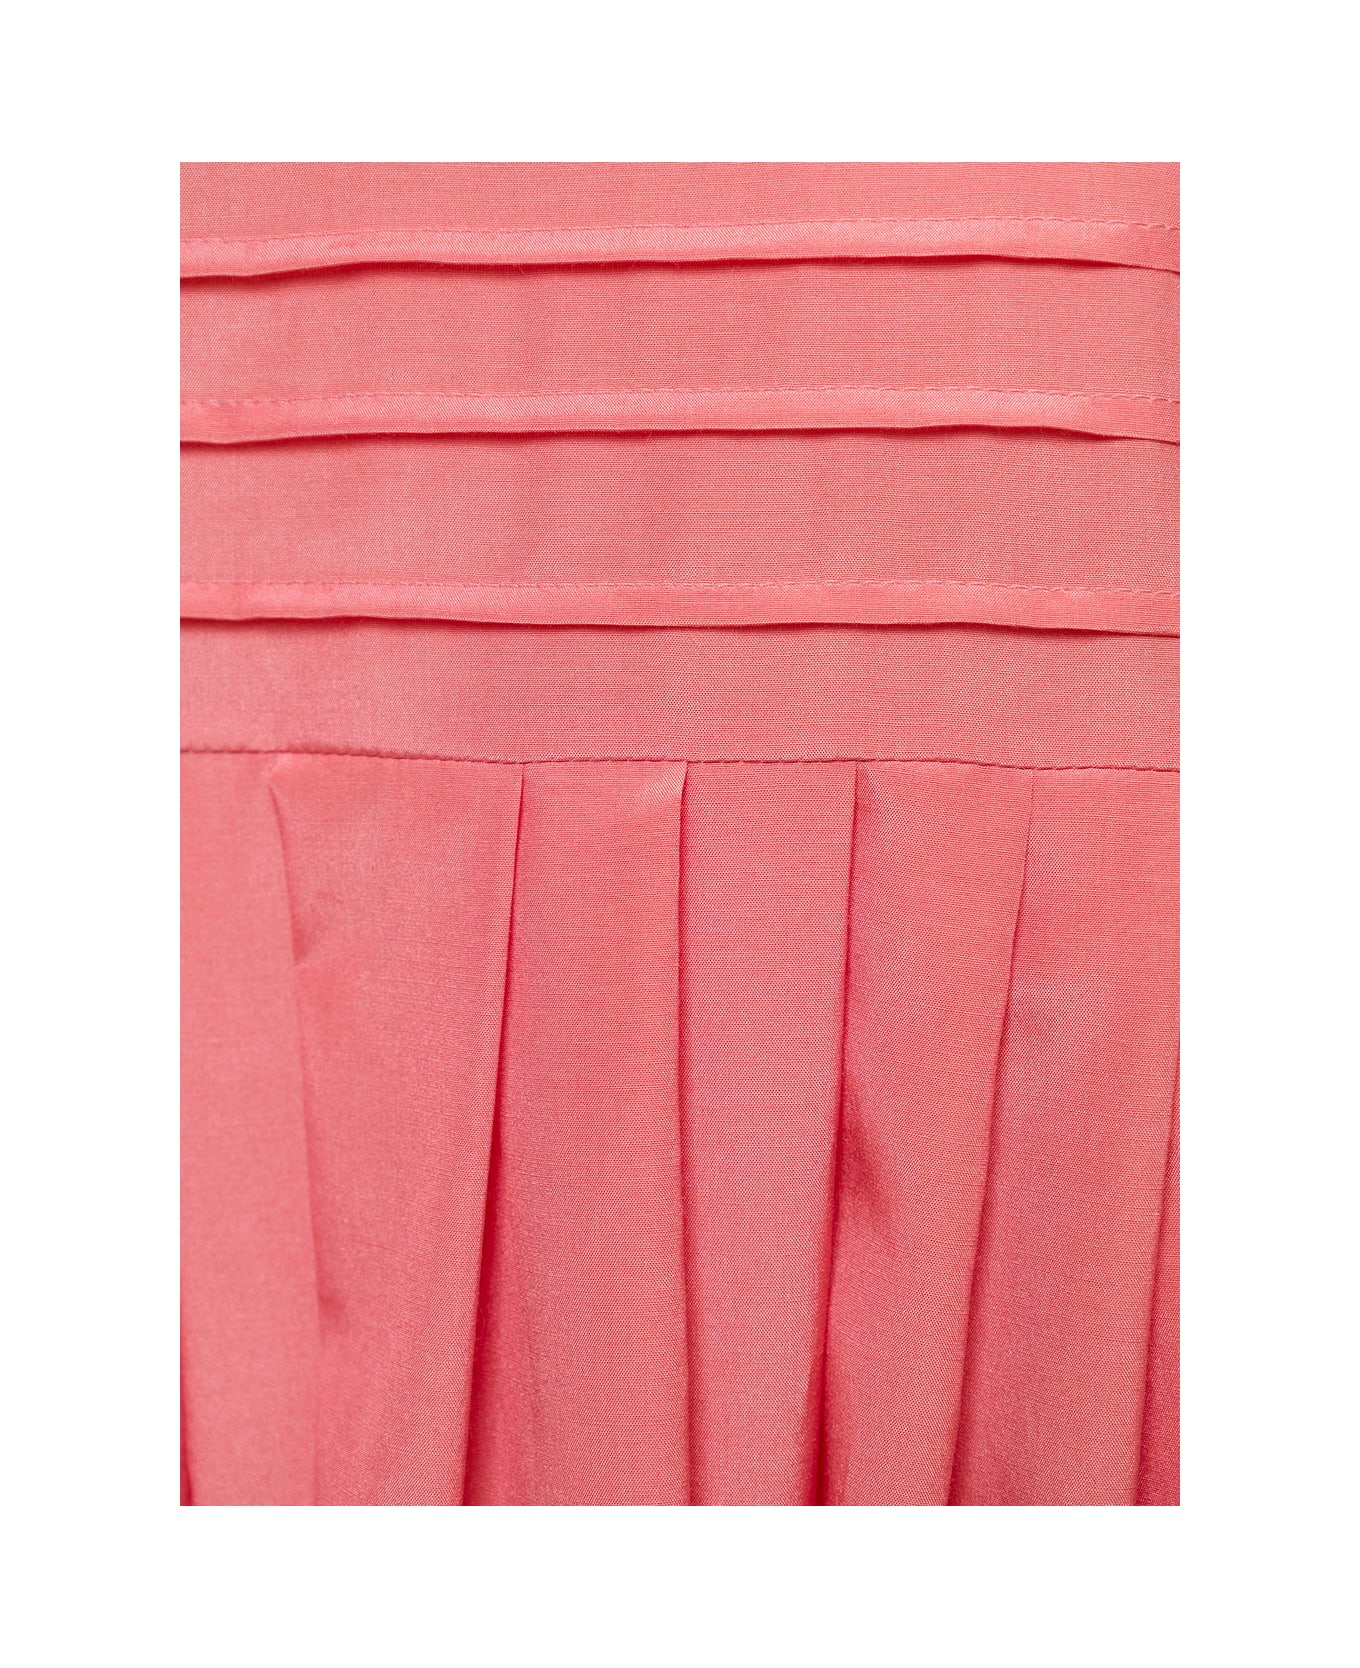 Mario Dice Woman's Pink Cotton Blend Dress - Pink